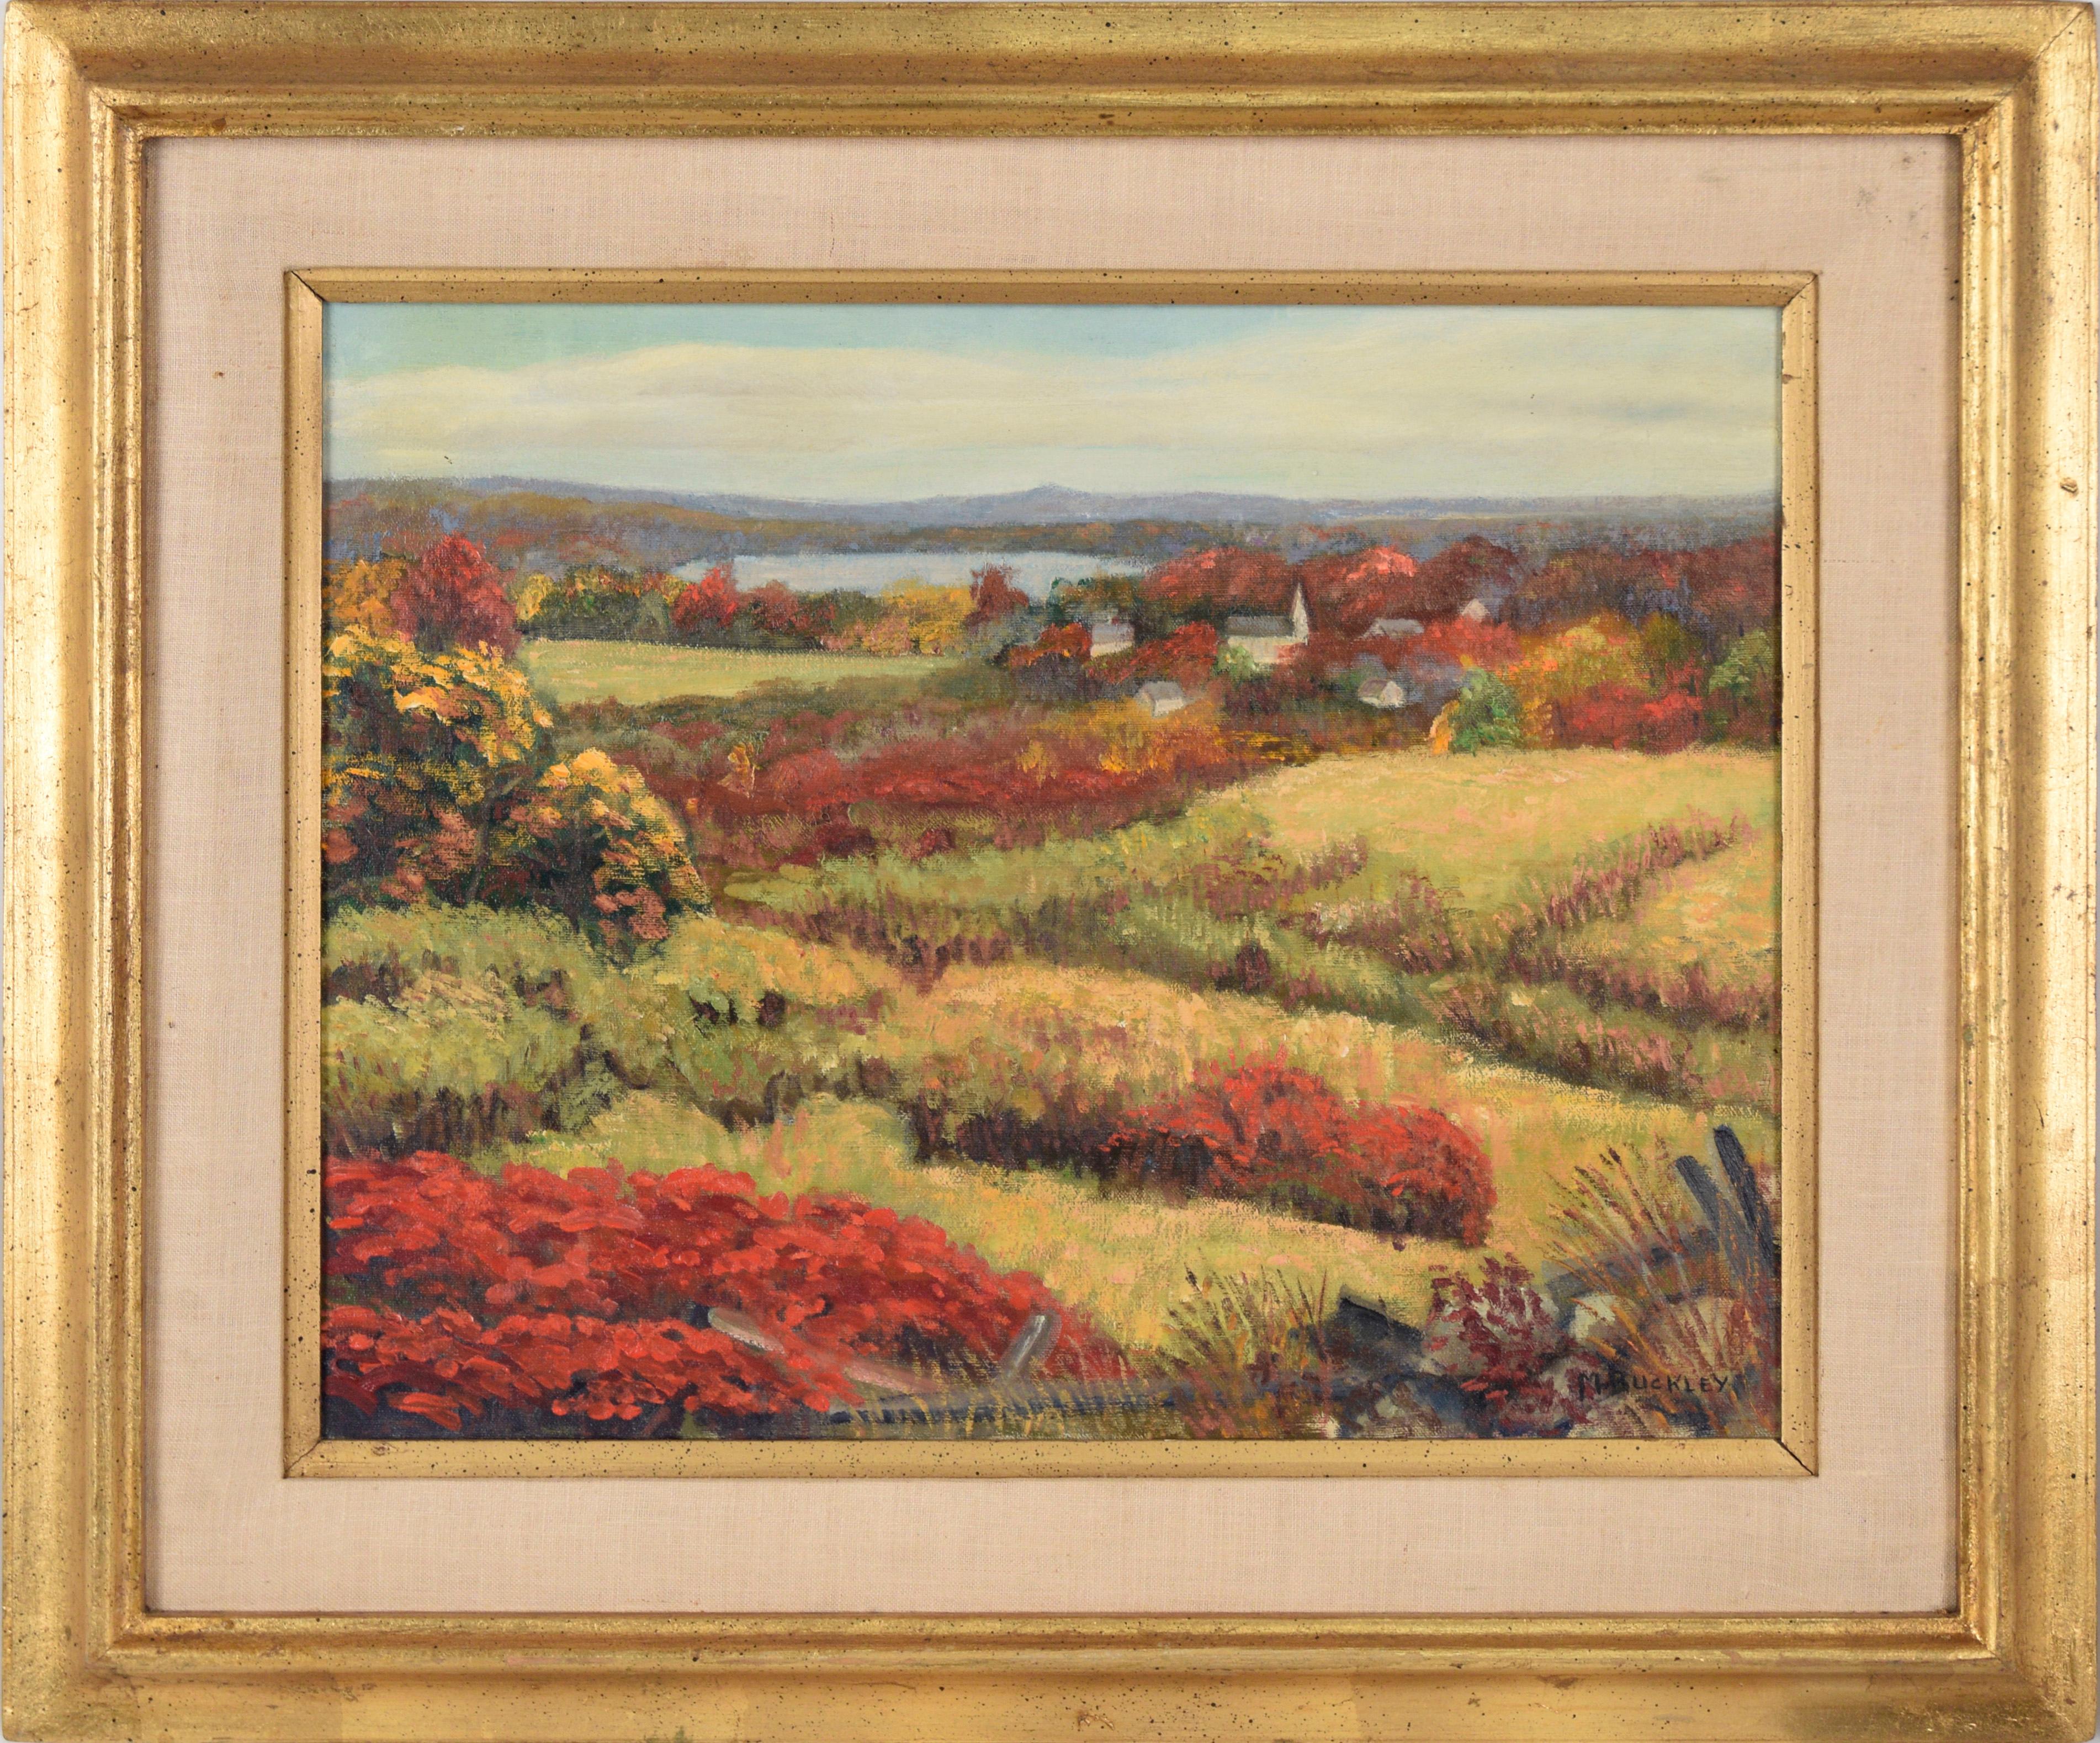 M. Buckley Landscape Painting - Poppy Fields Outside of Town - Landscape in Oil on Canvas